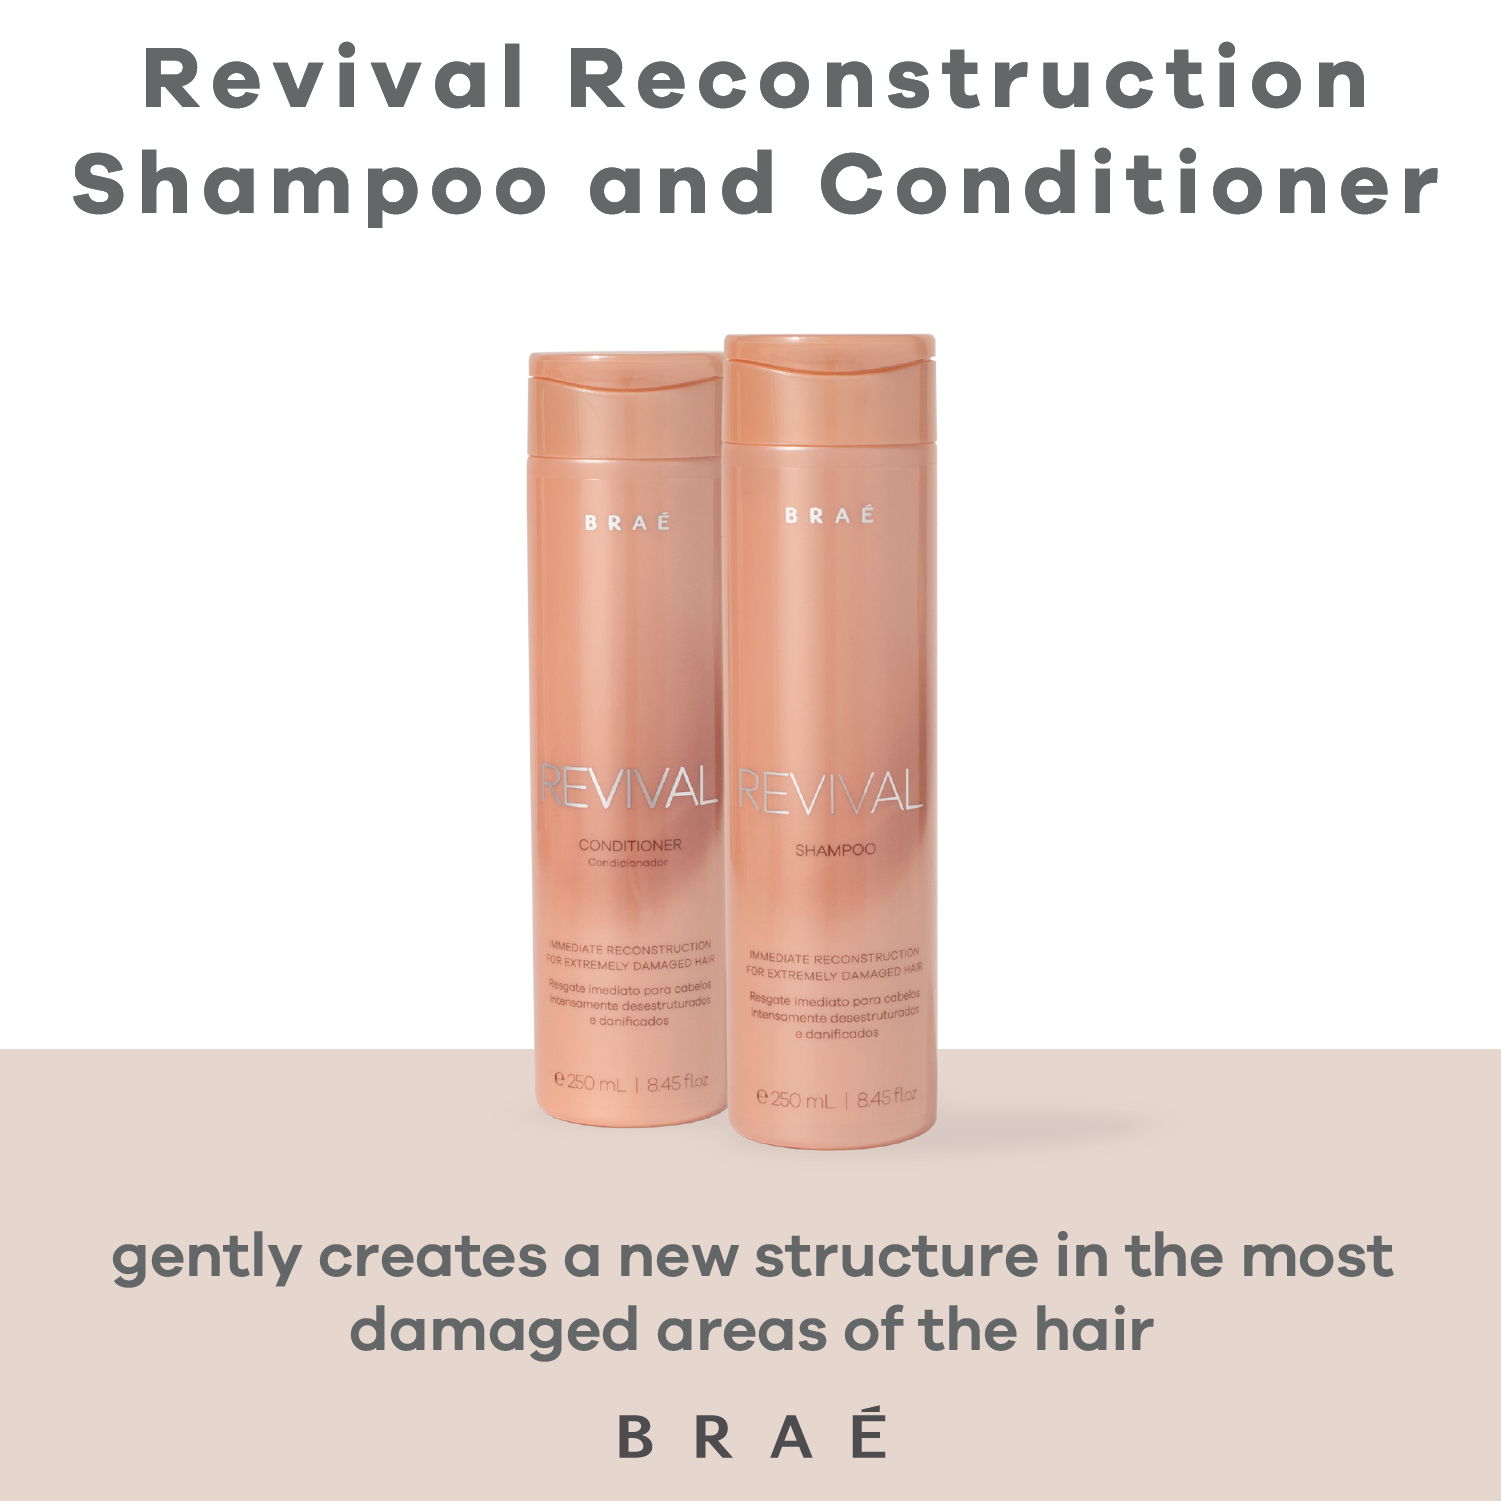 Hair Repair Shampoo and Conditioner - Revival Set 8.45 fl. oz